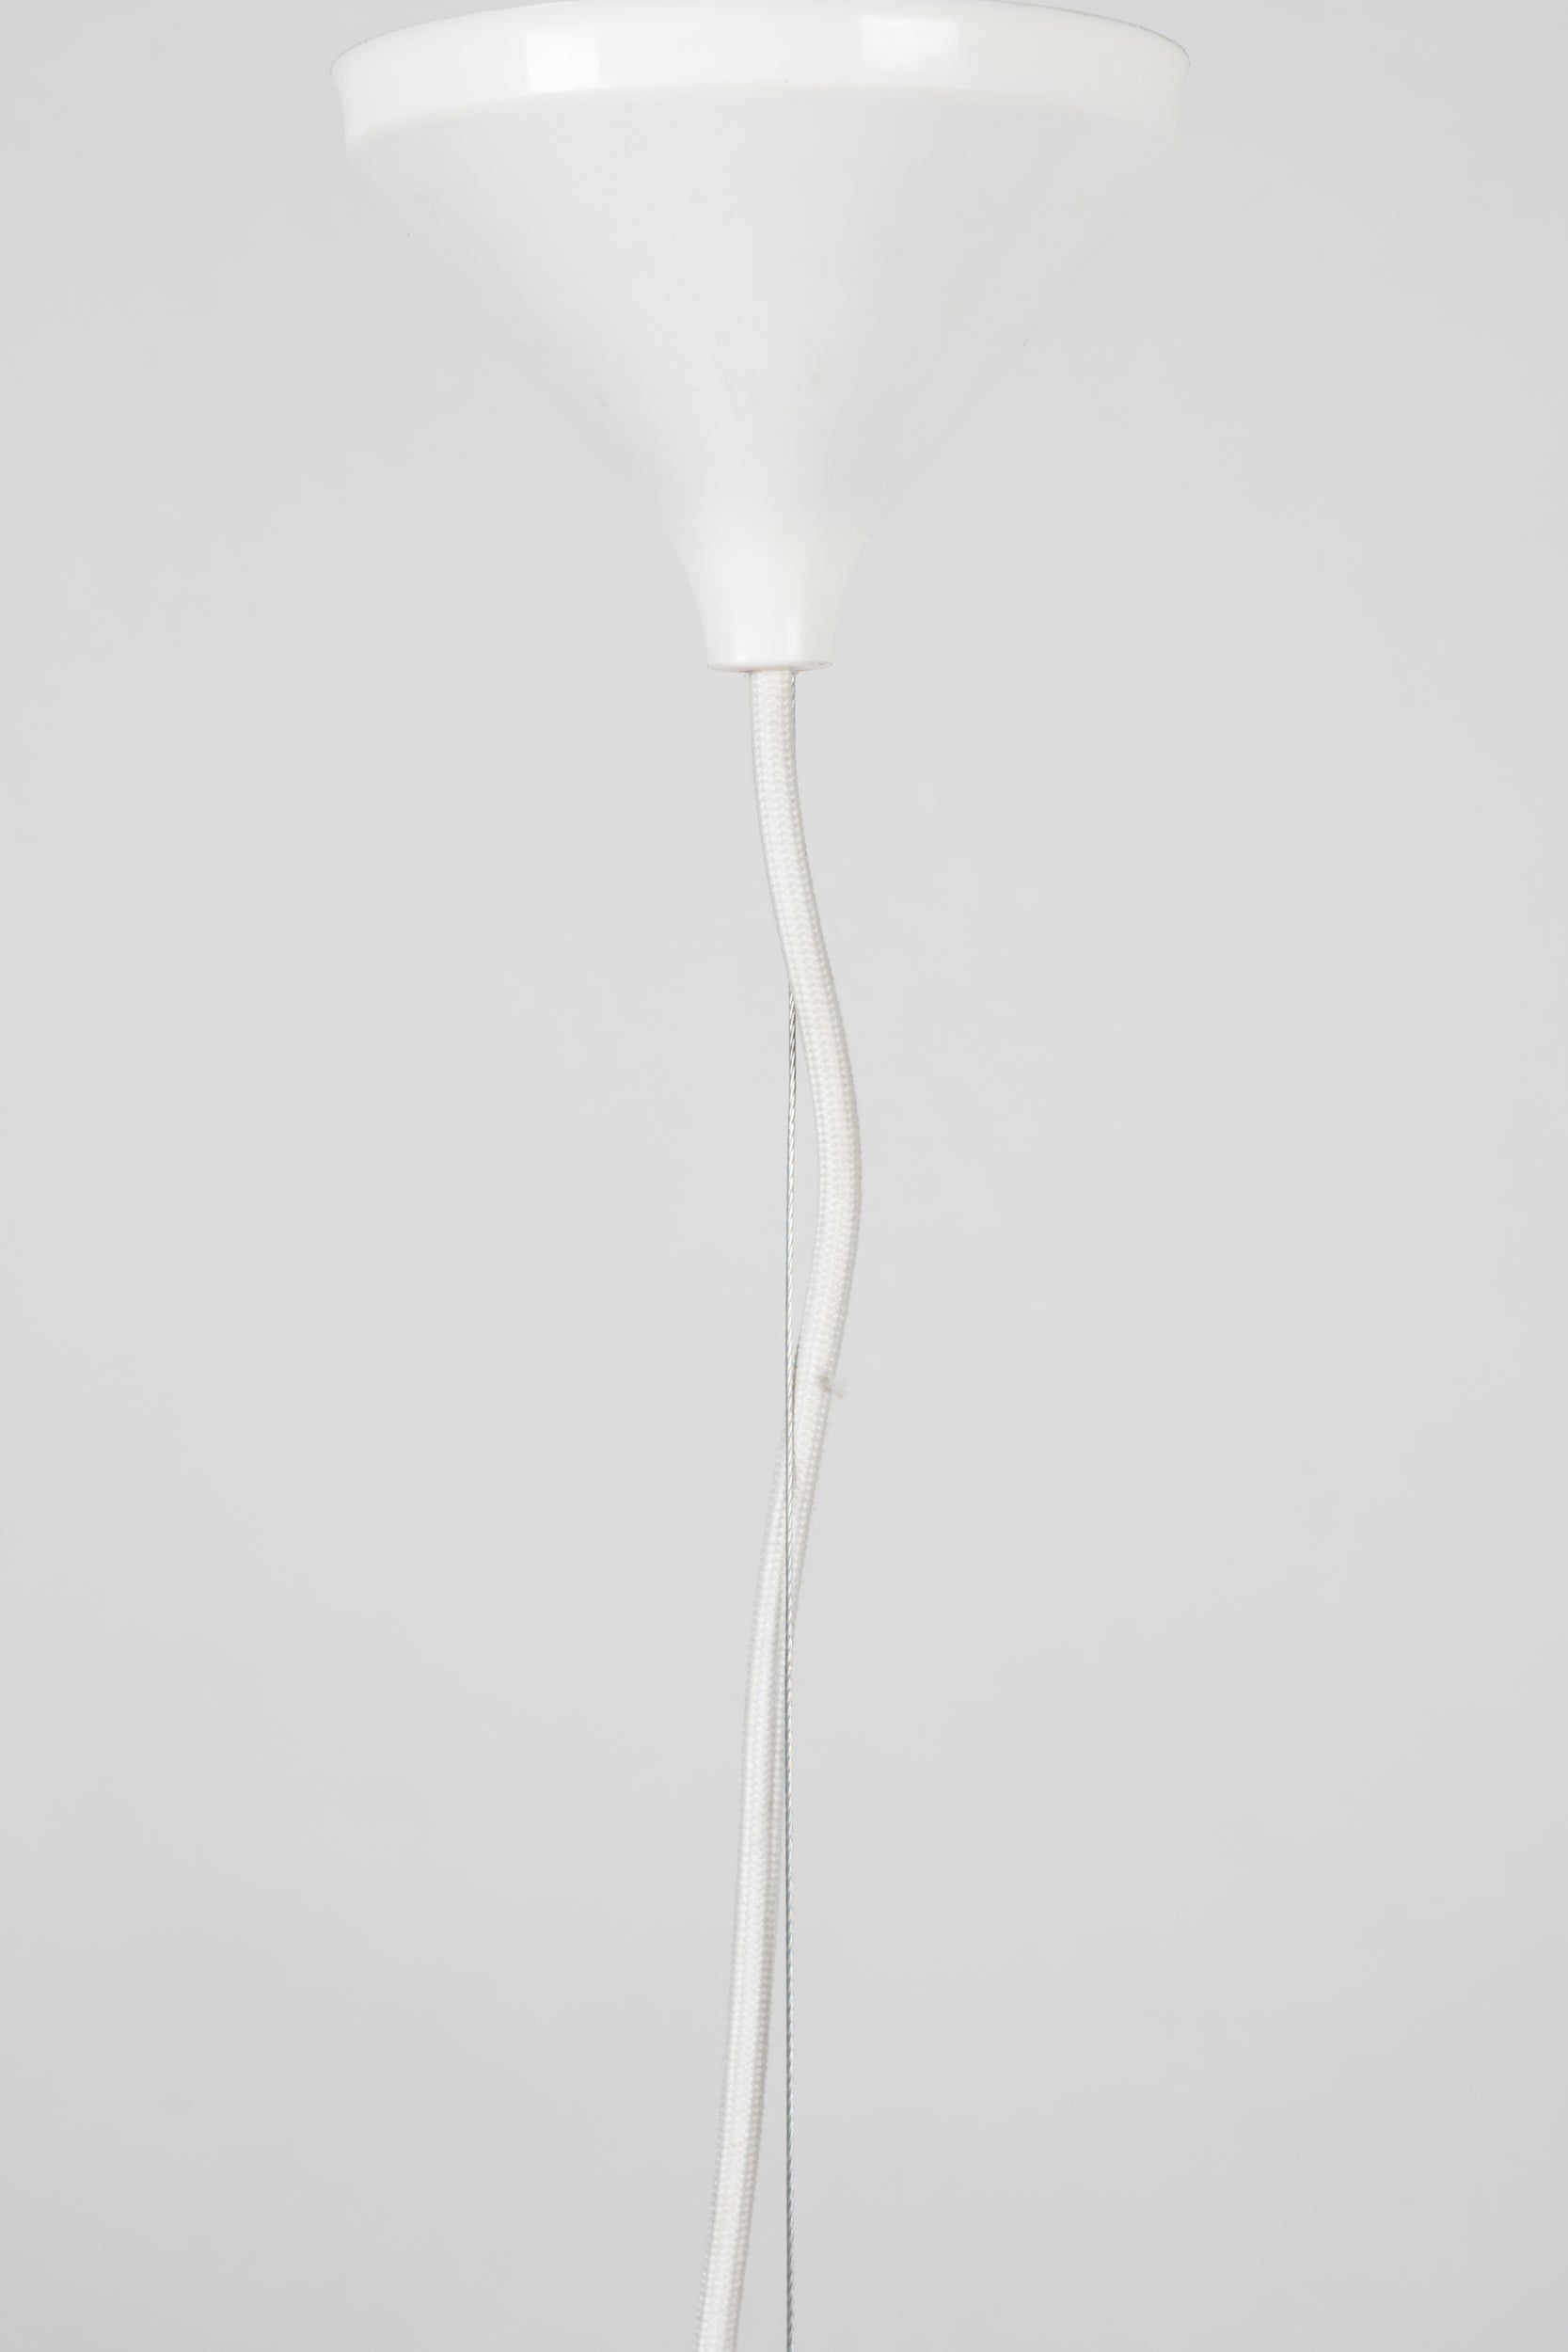 Poul Henningsen, Charlottenborg ceiling lamp, Louis Poulsen, 60s